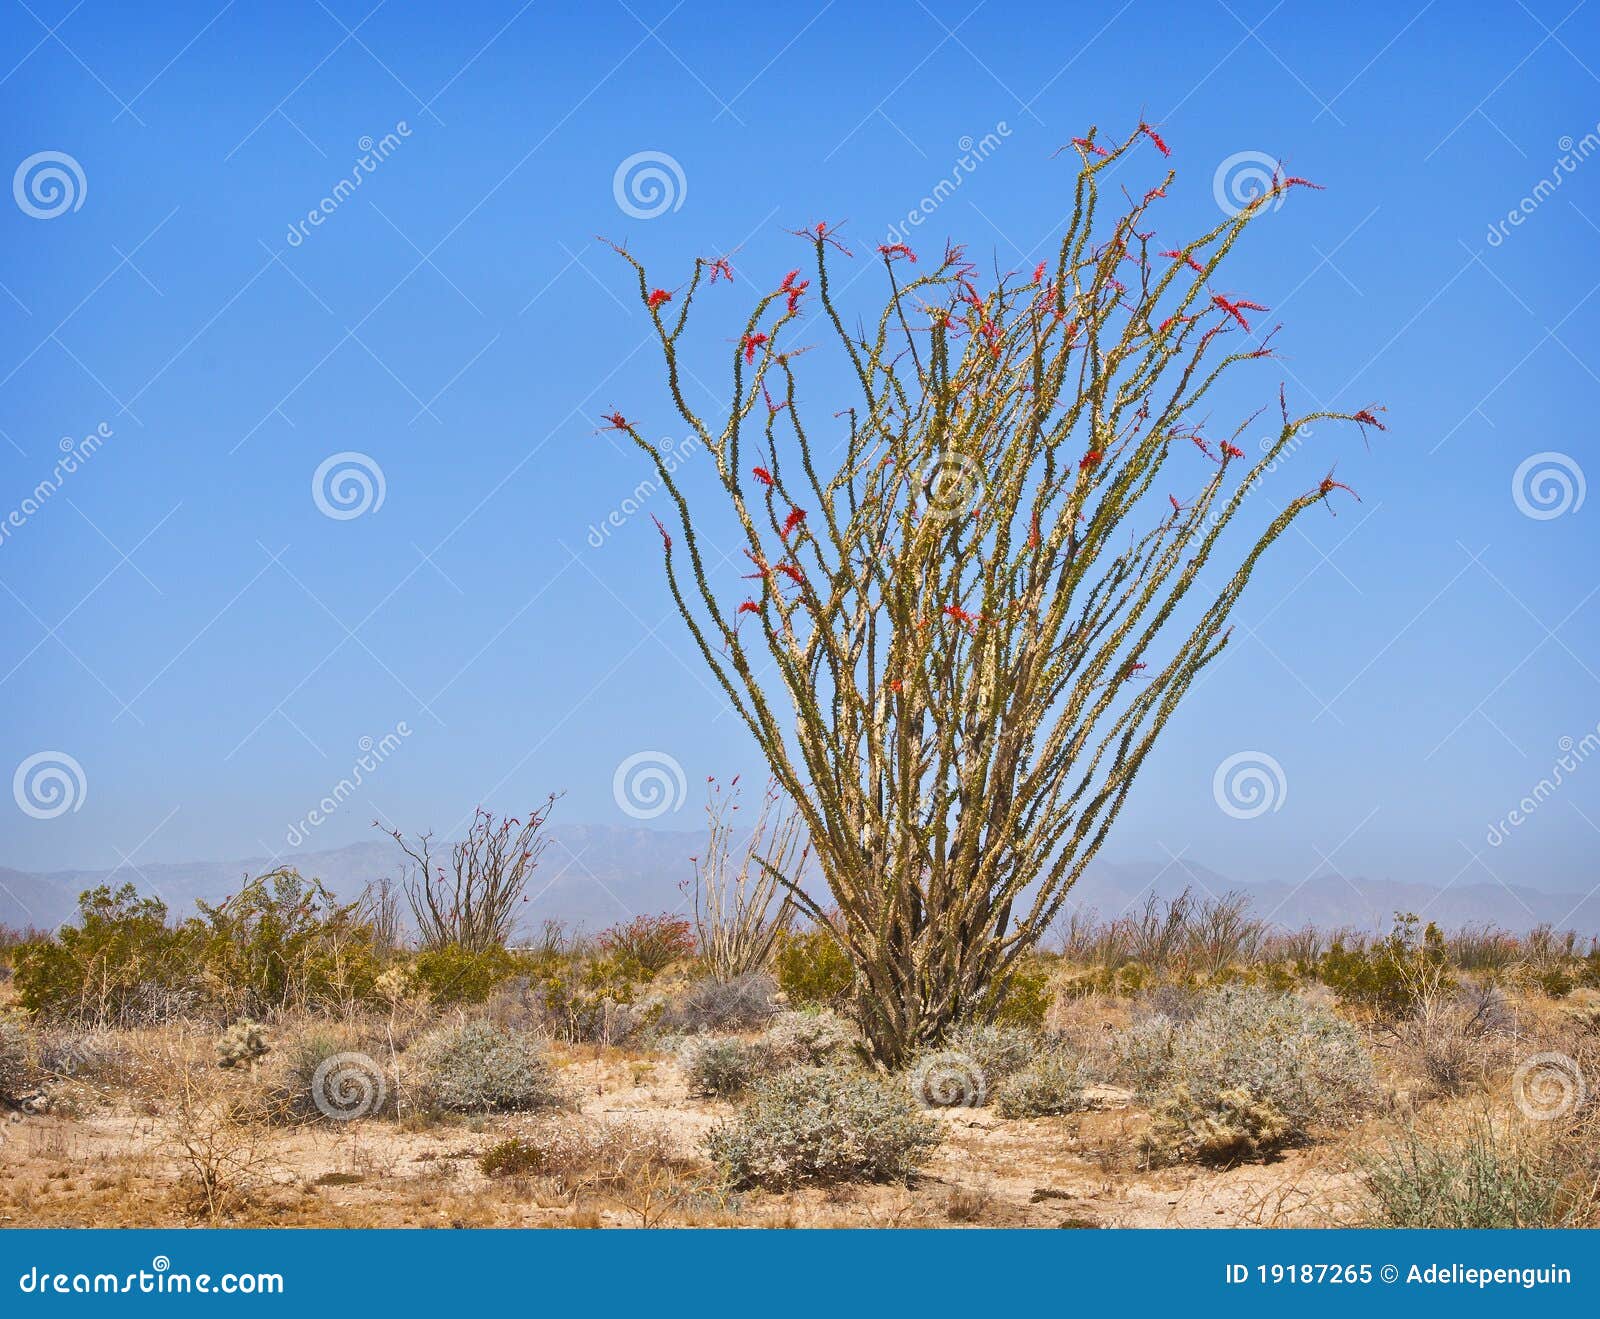 ocotillo in the california desert